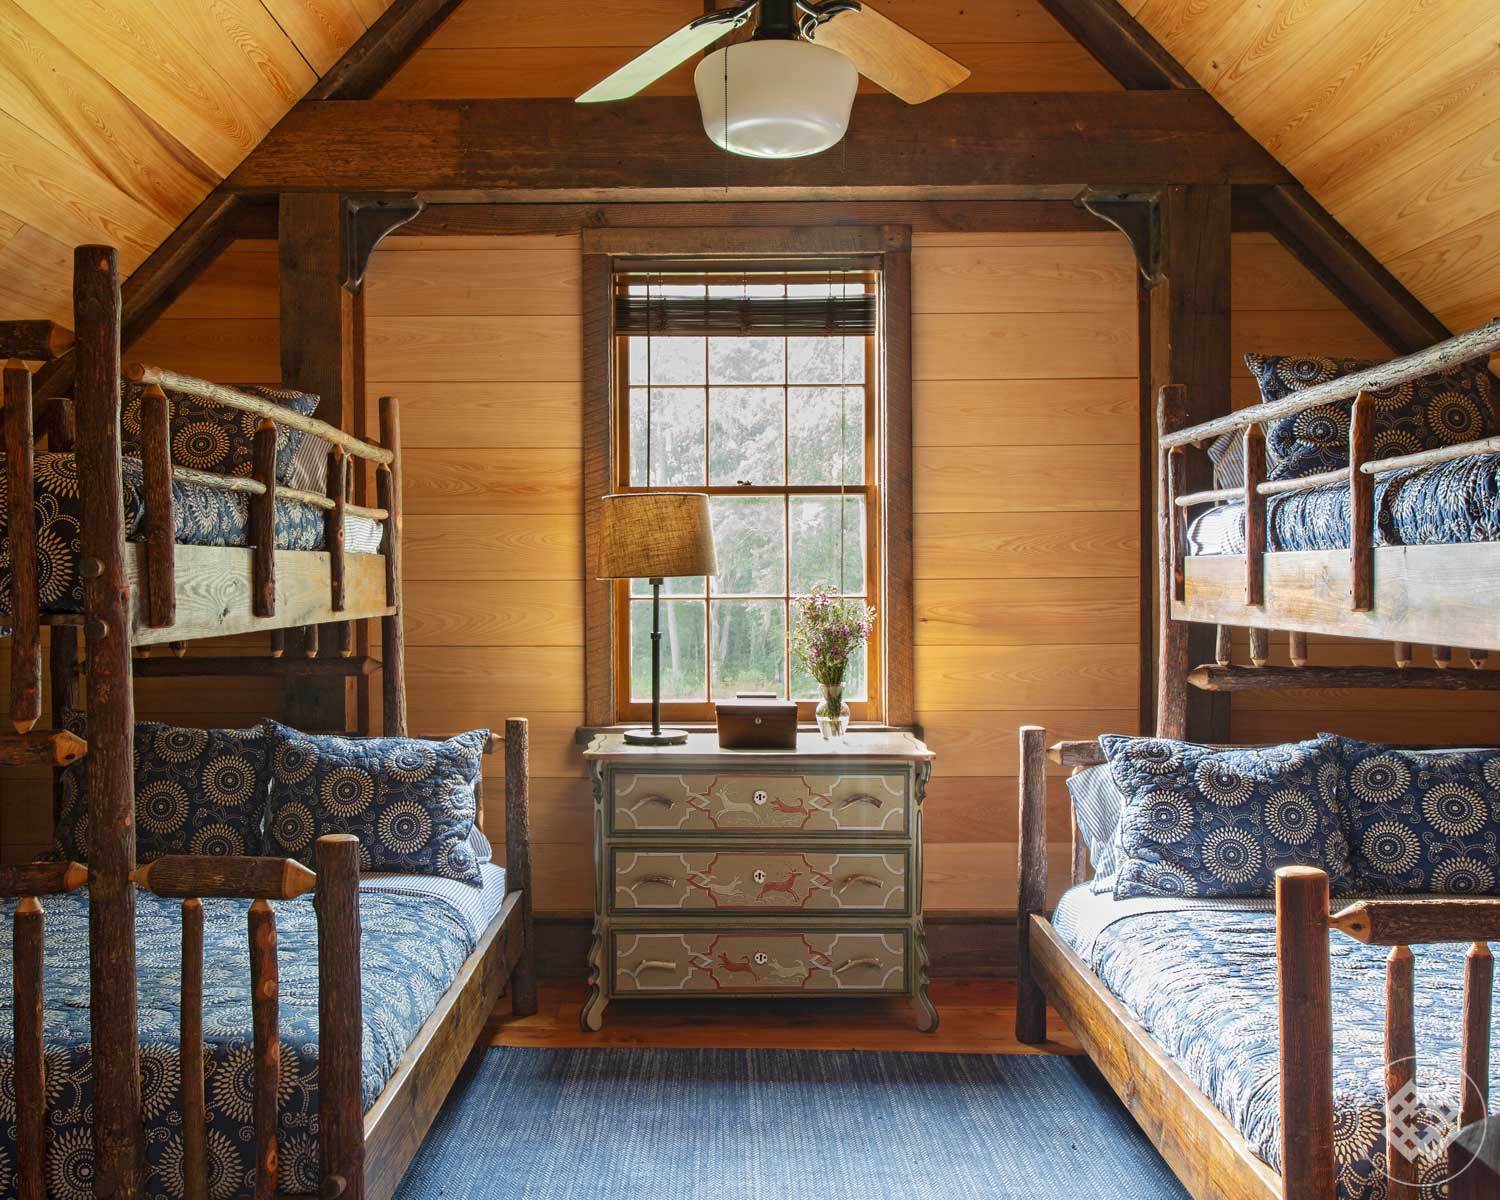 mfh-bunk-room-twig-beds-vintage-chest.jpg